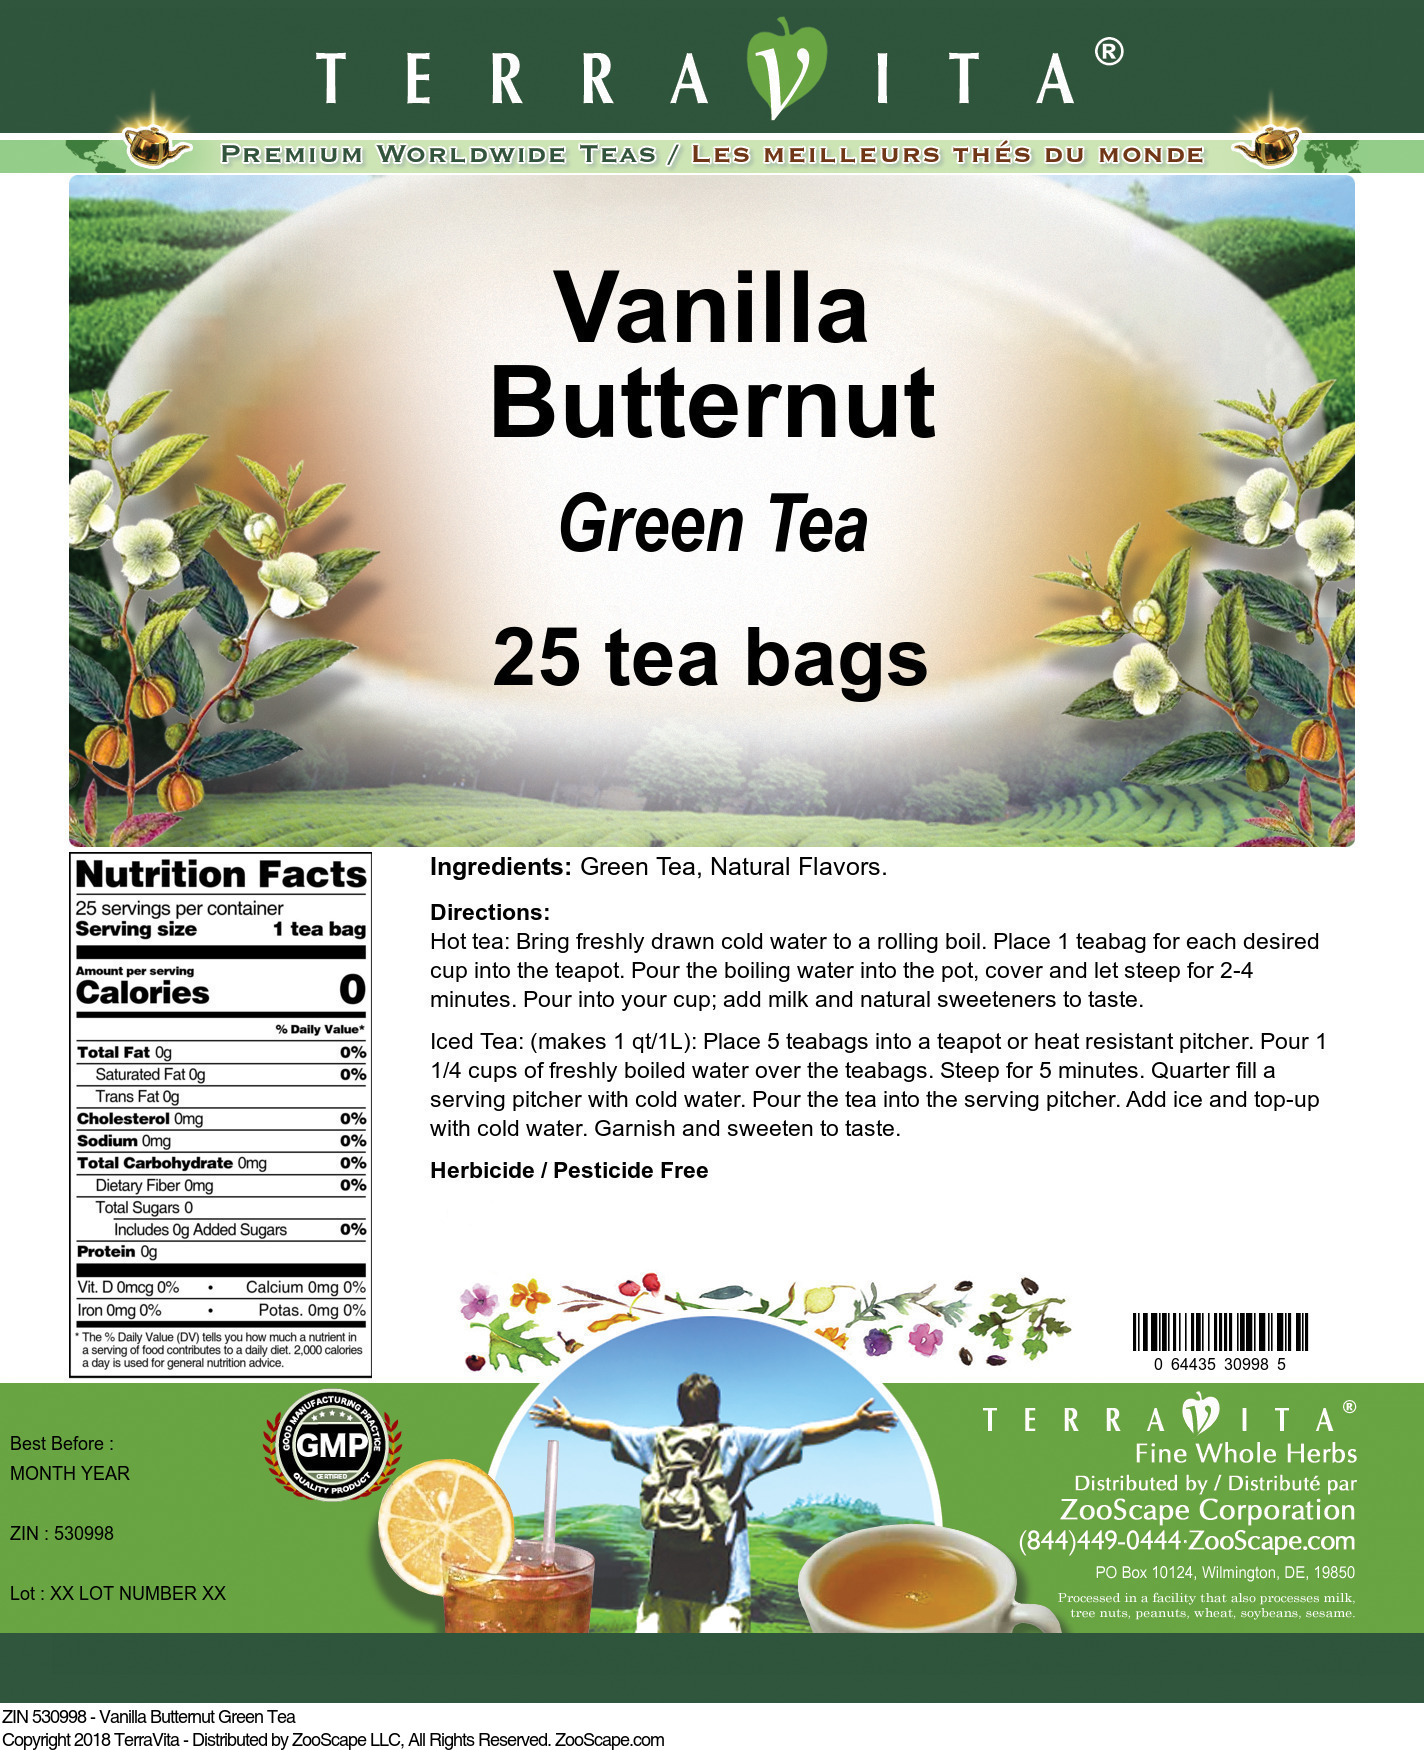 Vanilla Butternut Green Tea - Label